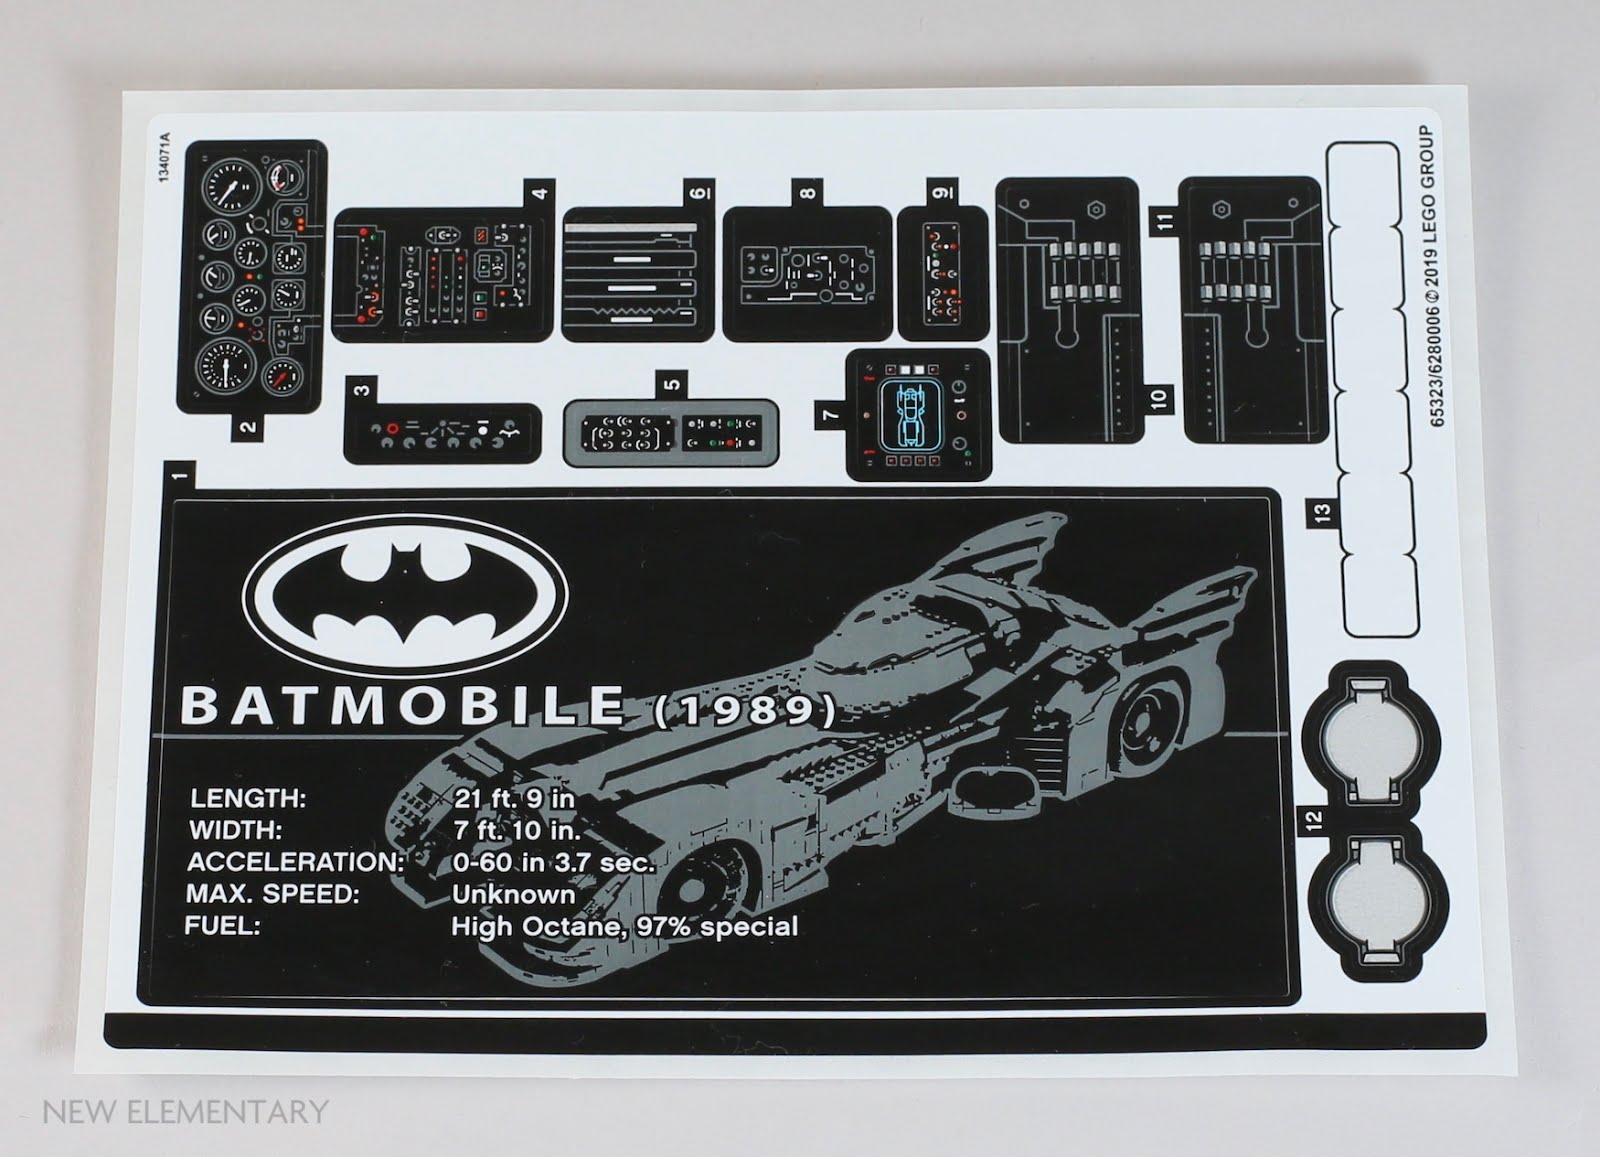 1989 Batmobile (LEGO DC Super Heroes - 76139) - Review - Brickonaute